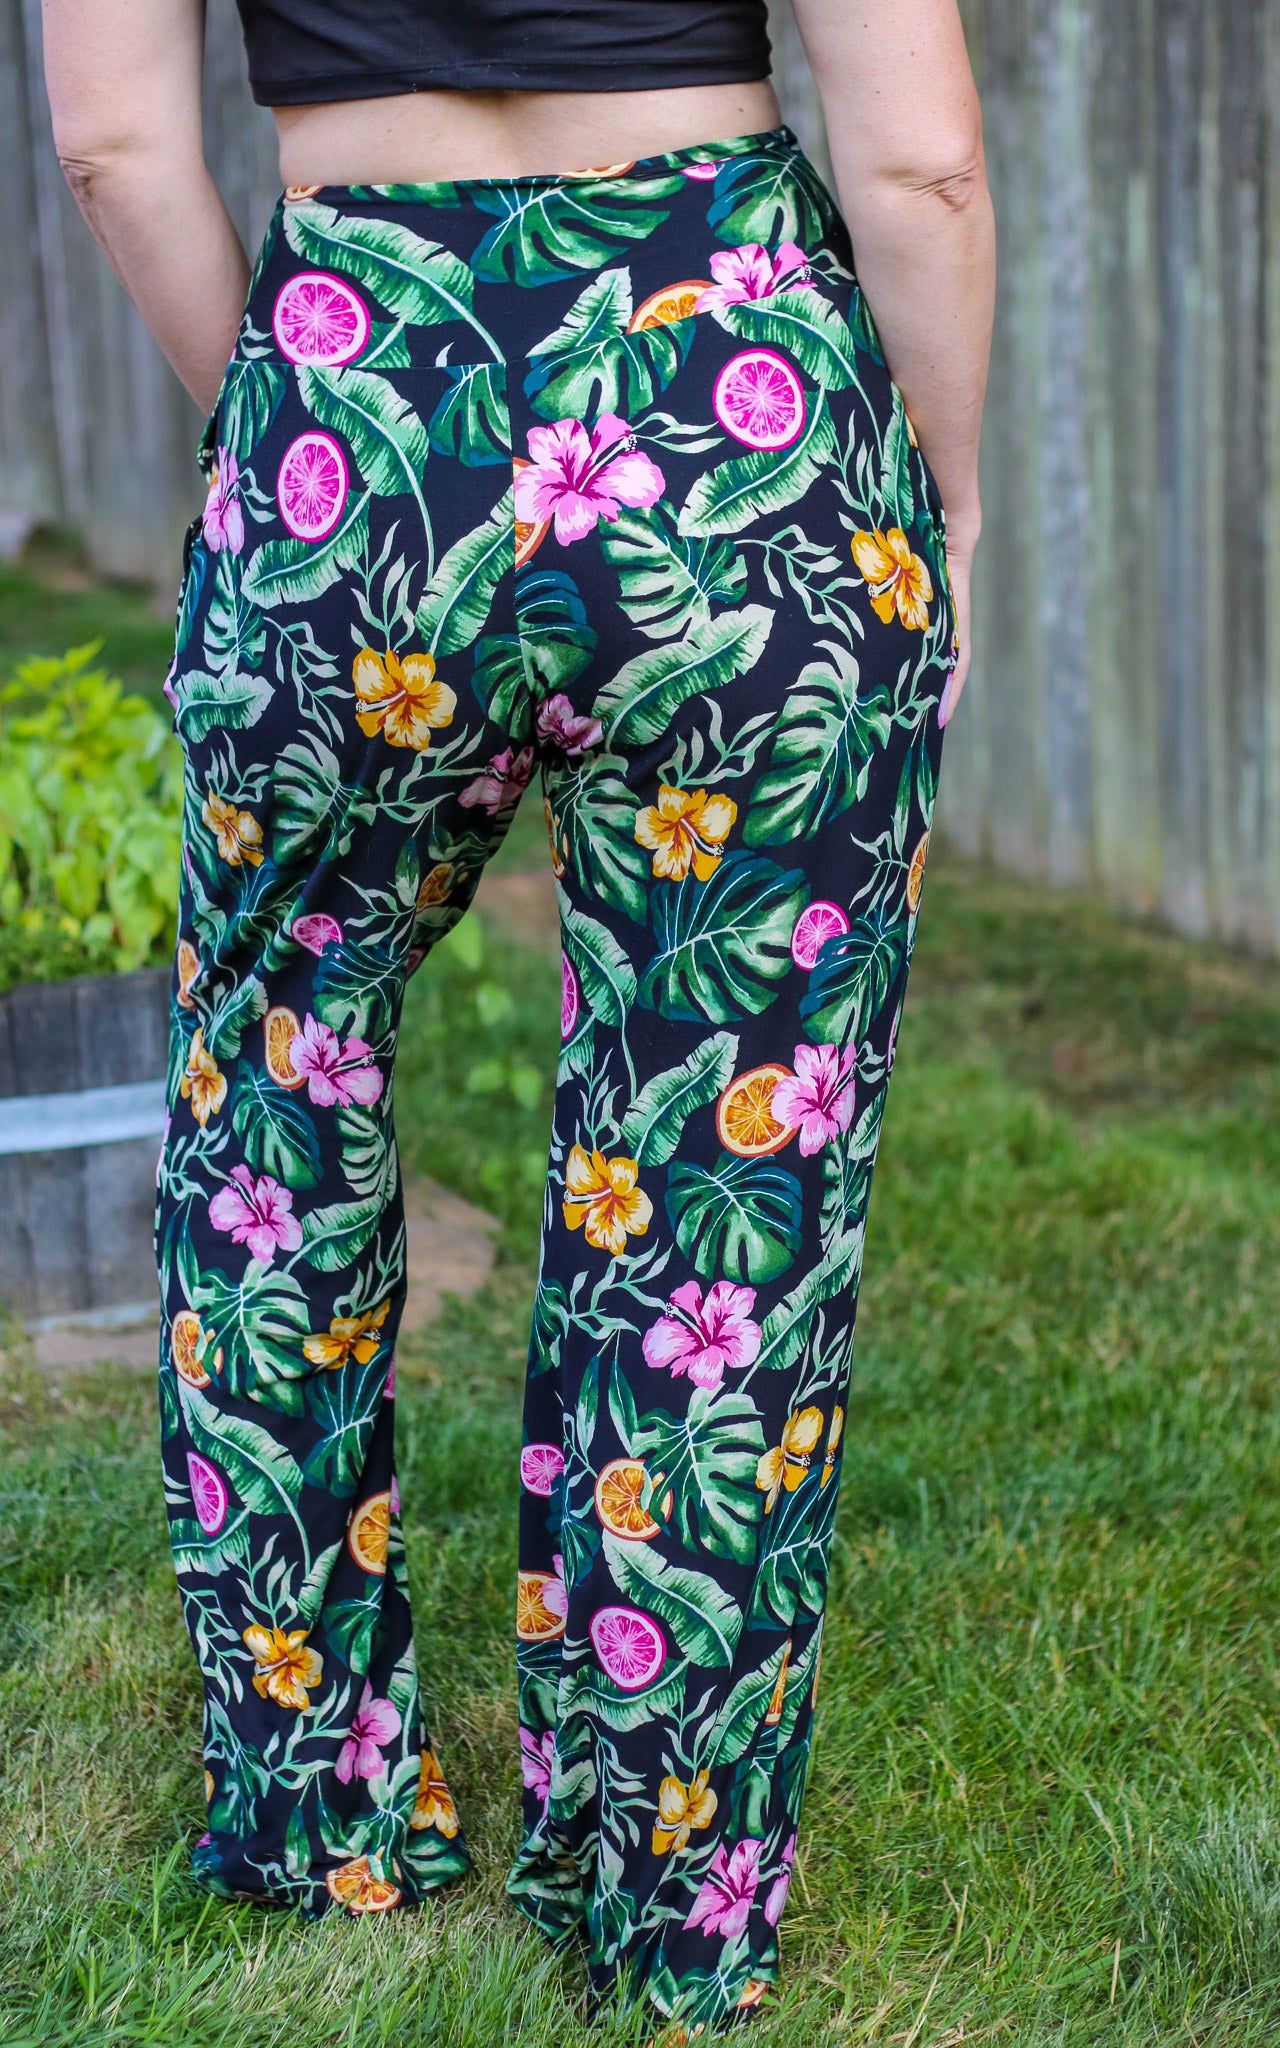 Image of green floral Rivet Patterns Pothos Pants being worn